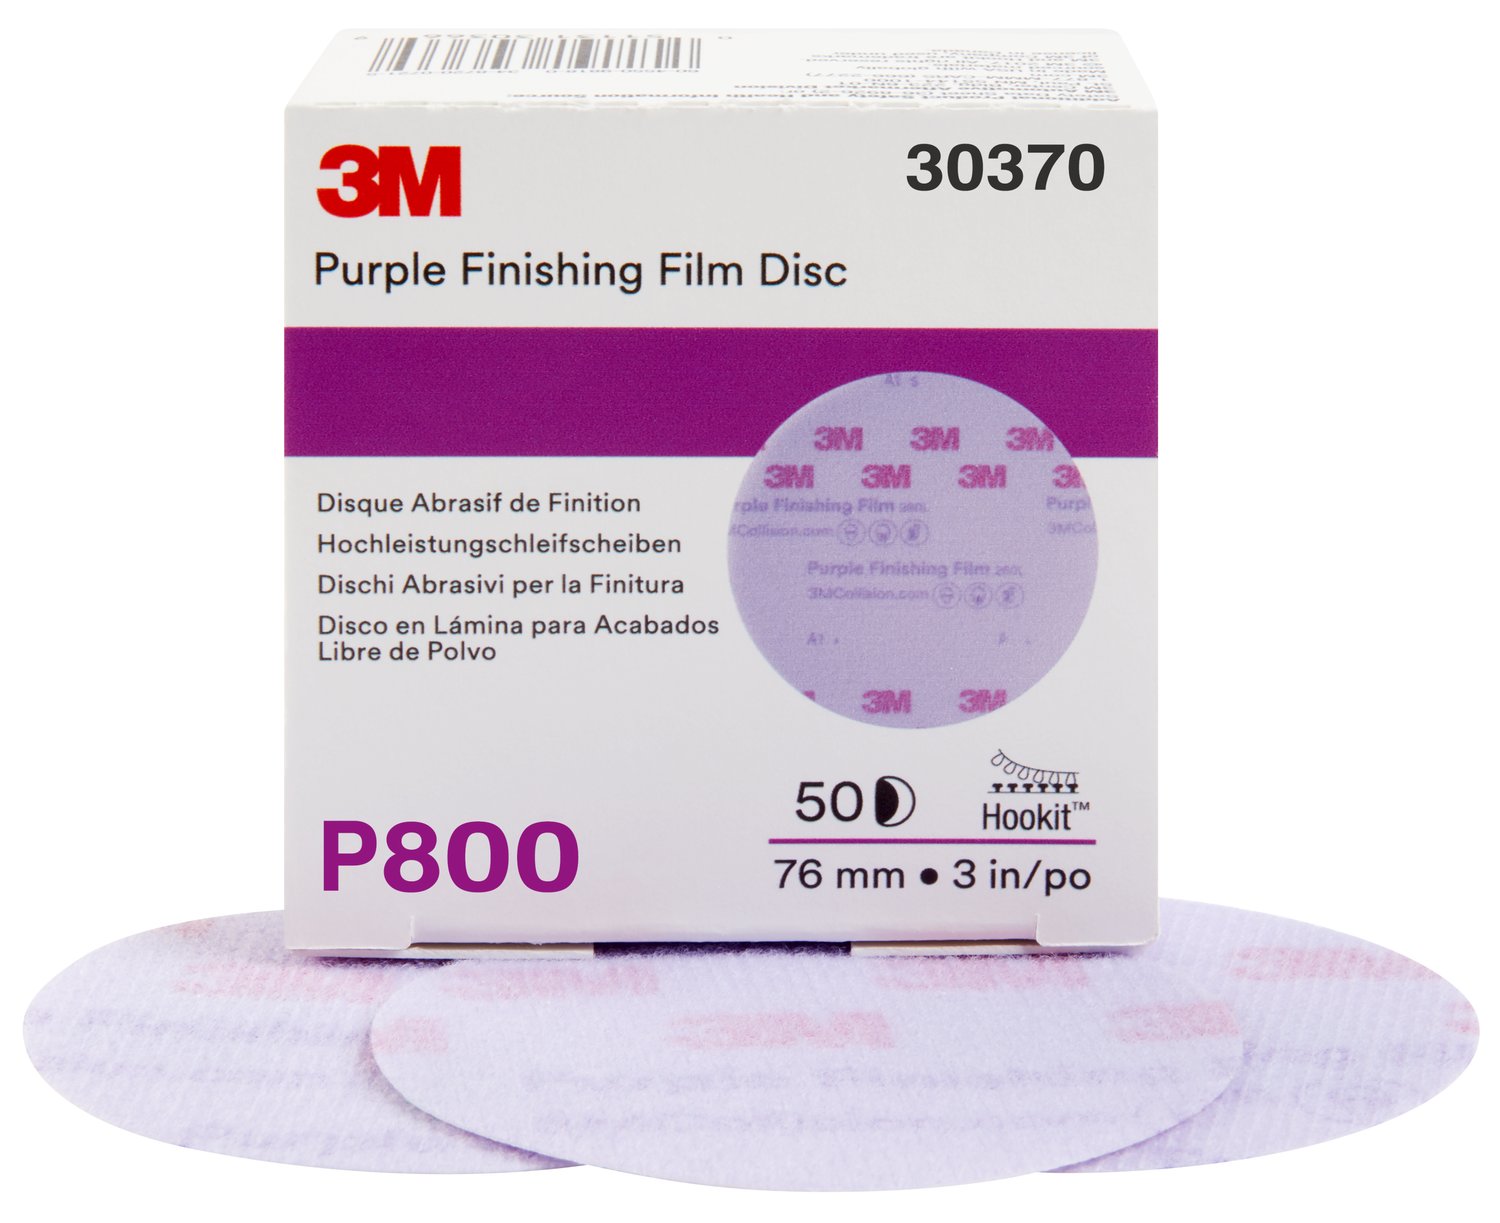 7100122788 - 3M Hookit Purple Finishing Film Abrasive Disc 260L, 30370, 3 in, P800,
50 discs per carton, 4 cartons per case